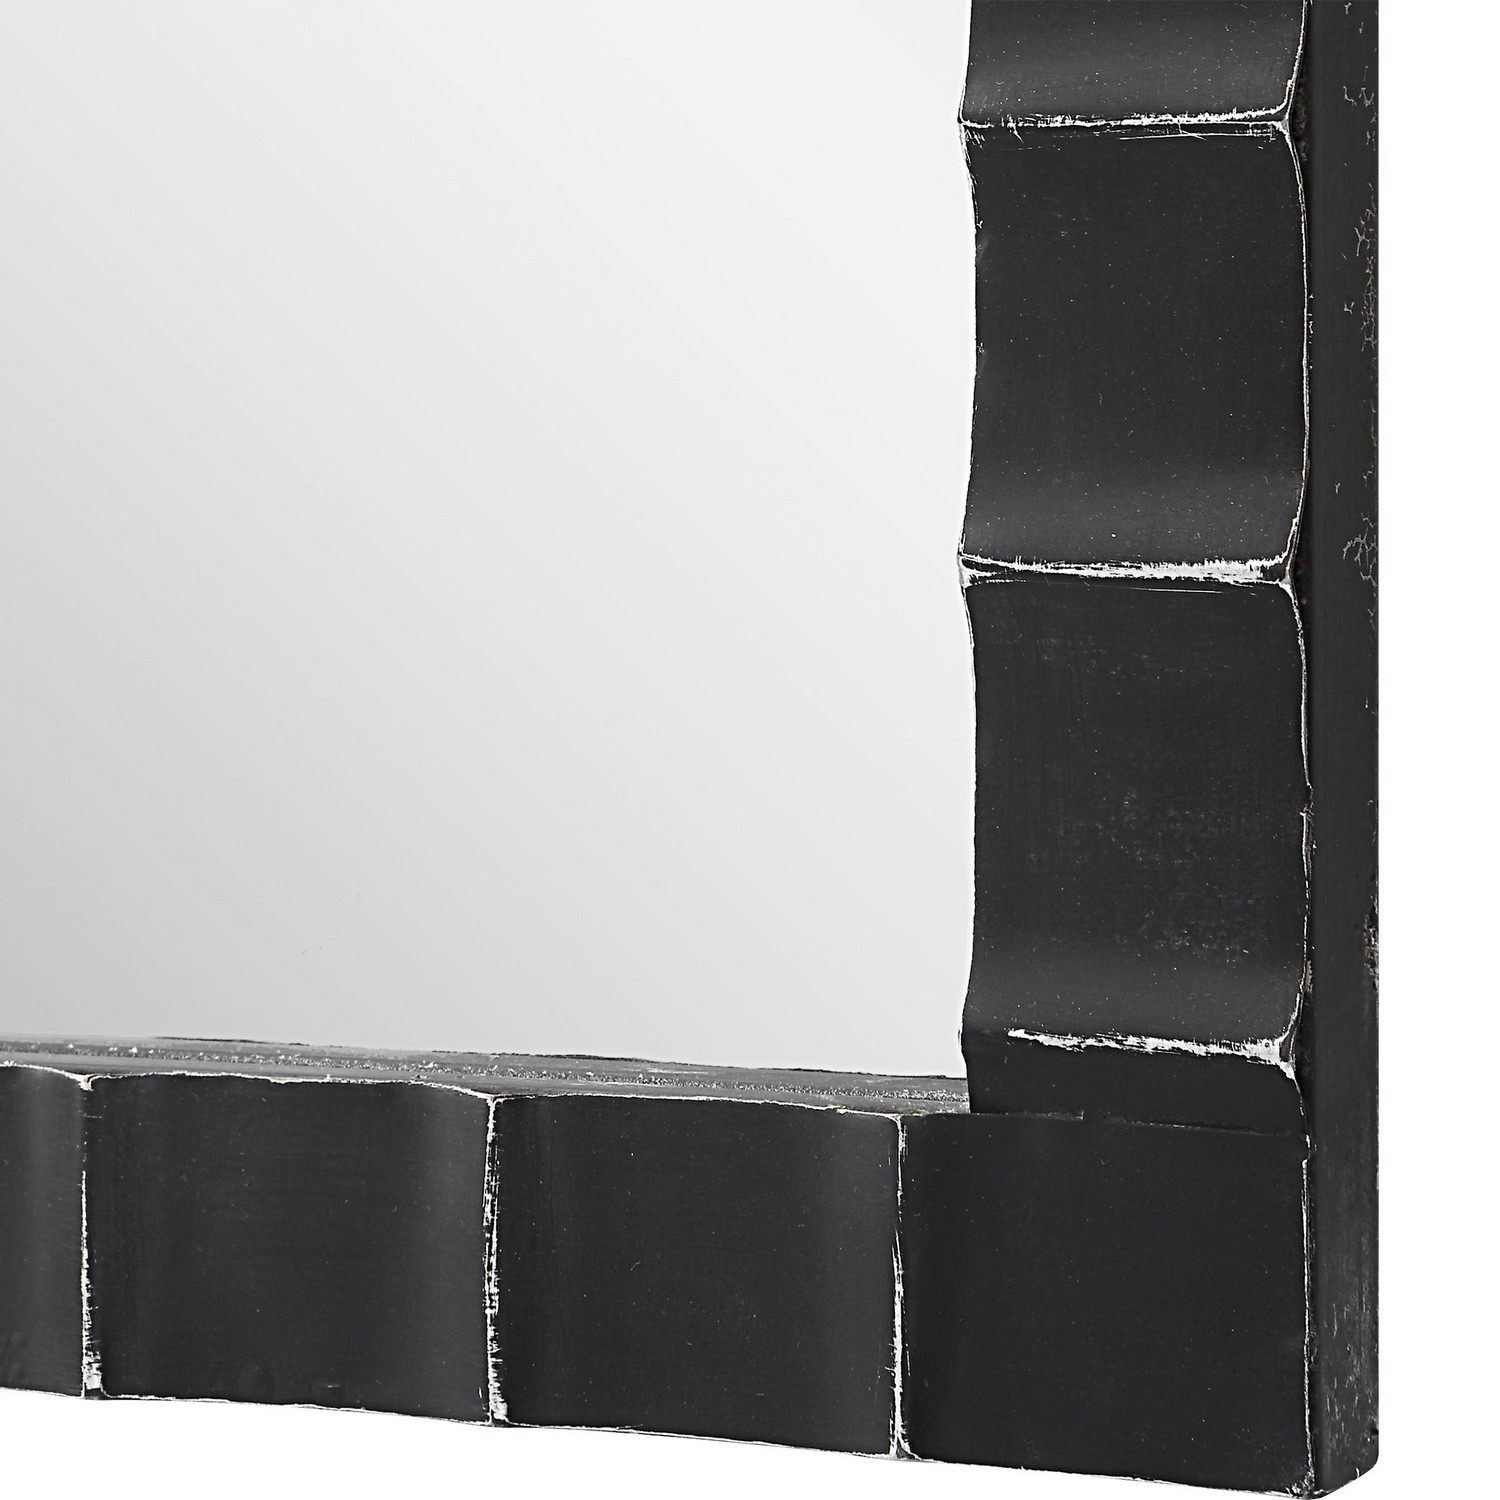 Uttermost Dandridge Industrial Mirror - Black